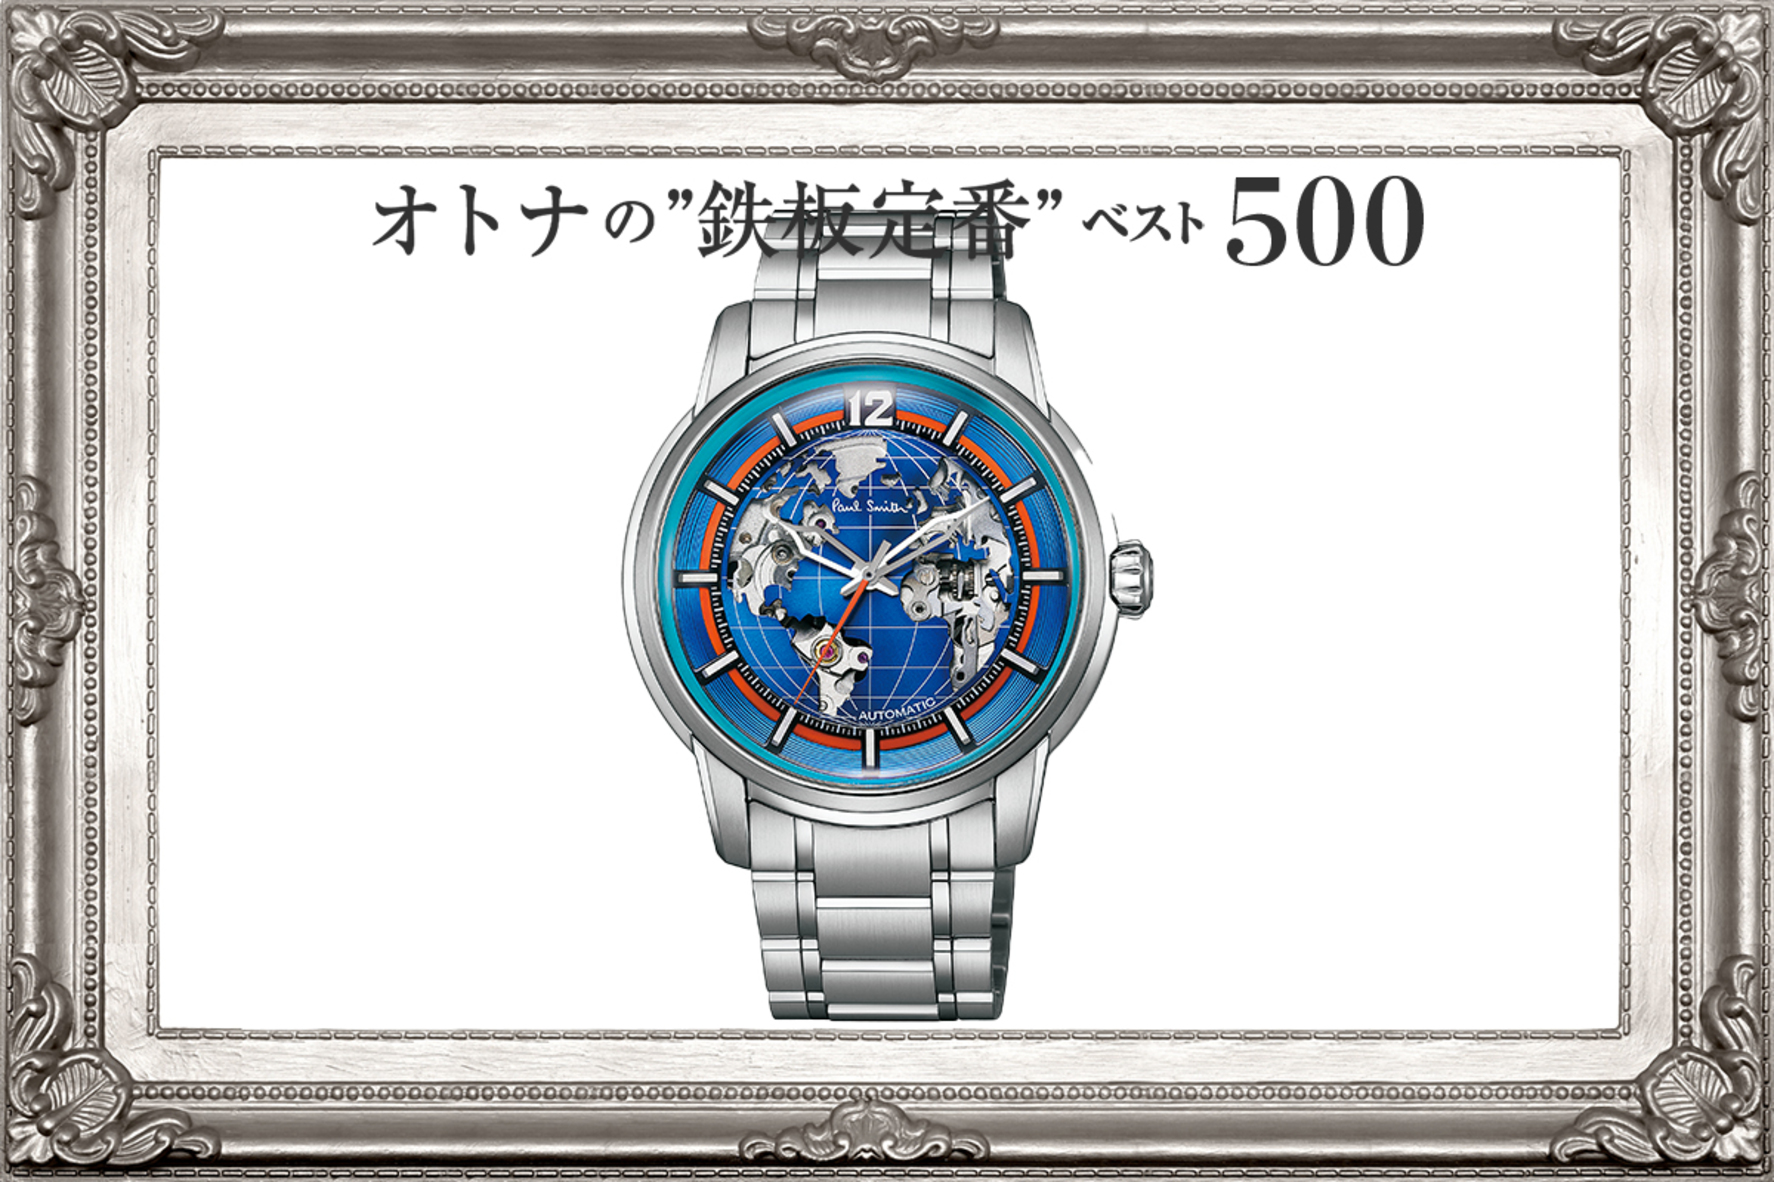 PaulSmith 500限定 マスターピース 機械式腕時計